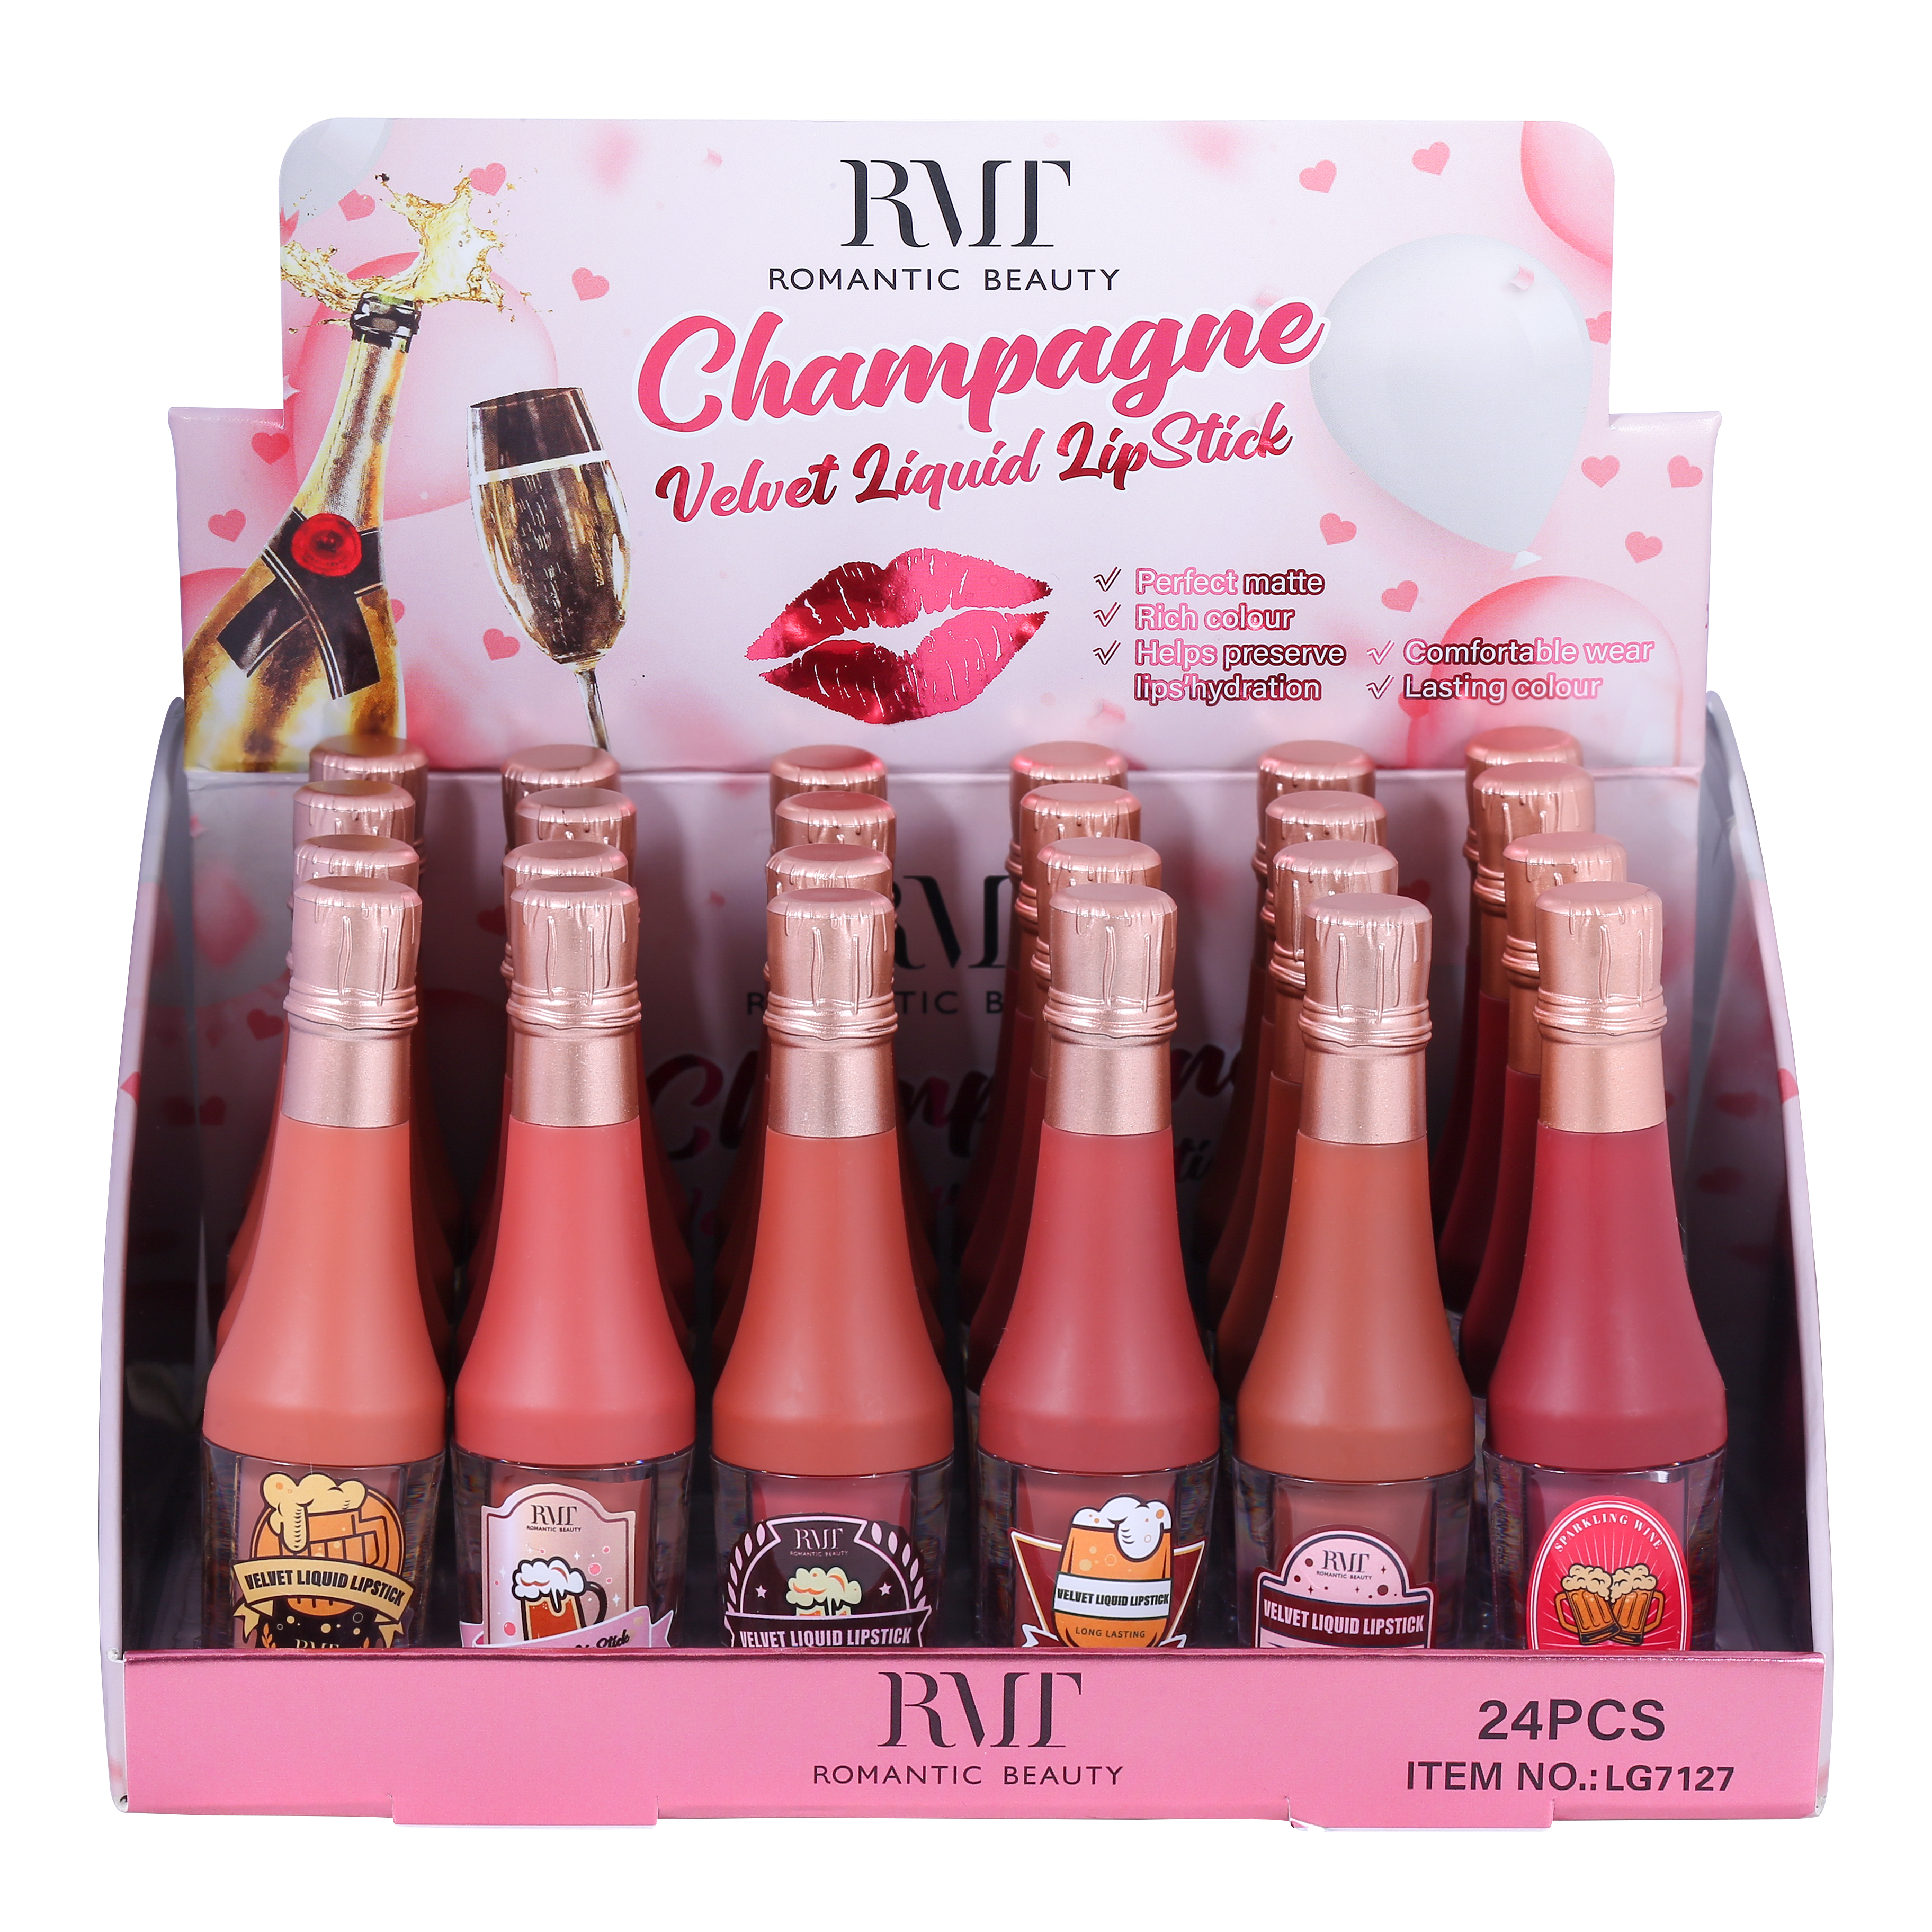 Champagne Velvet Liquid Lipstick